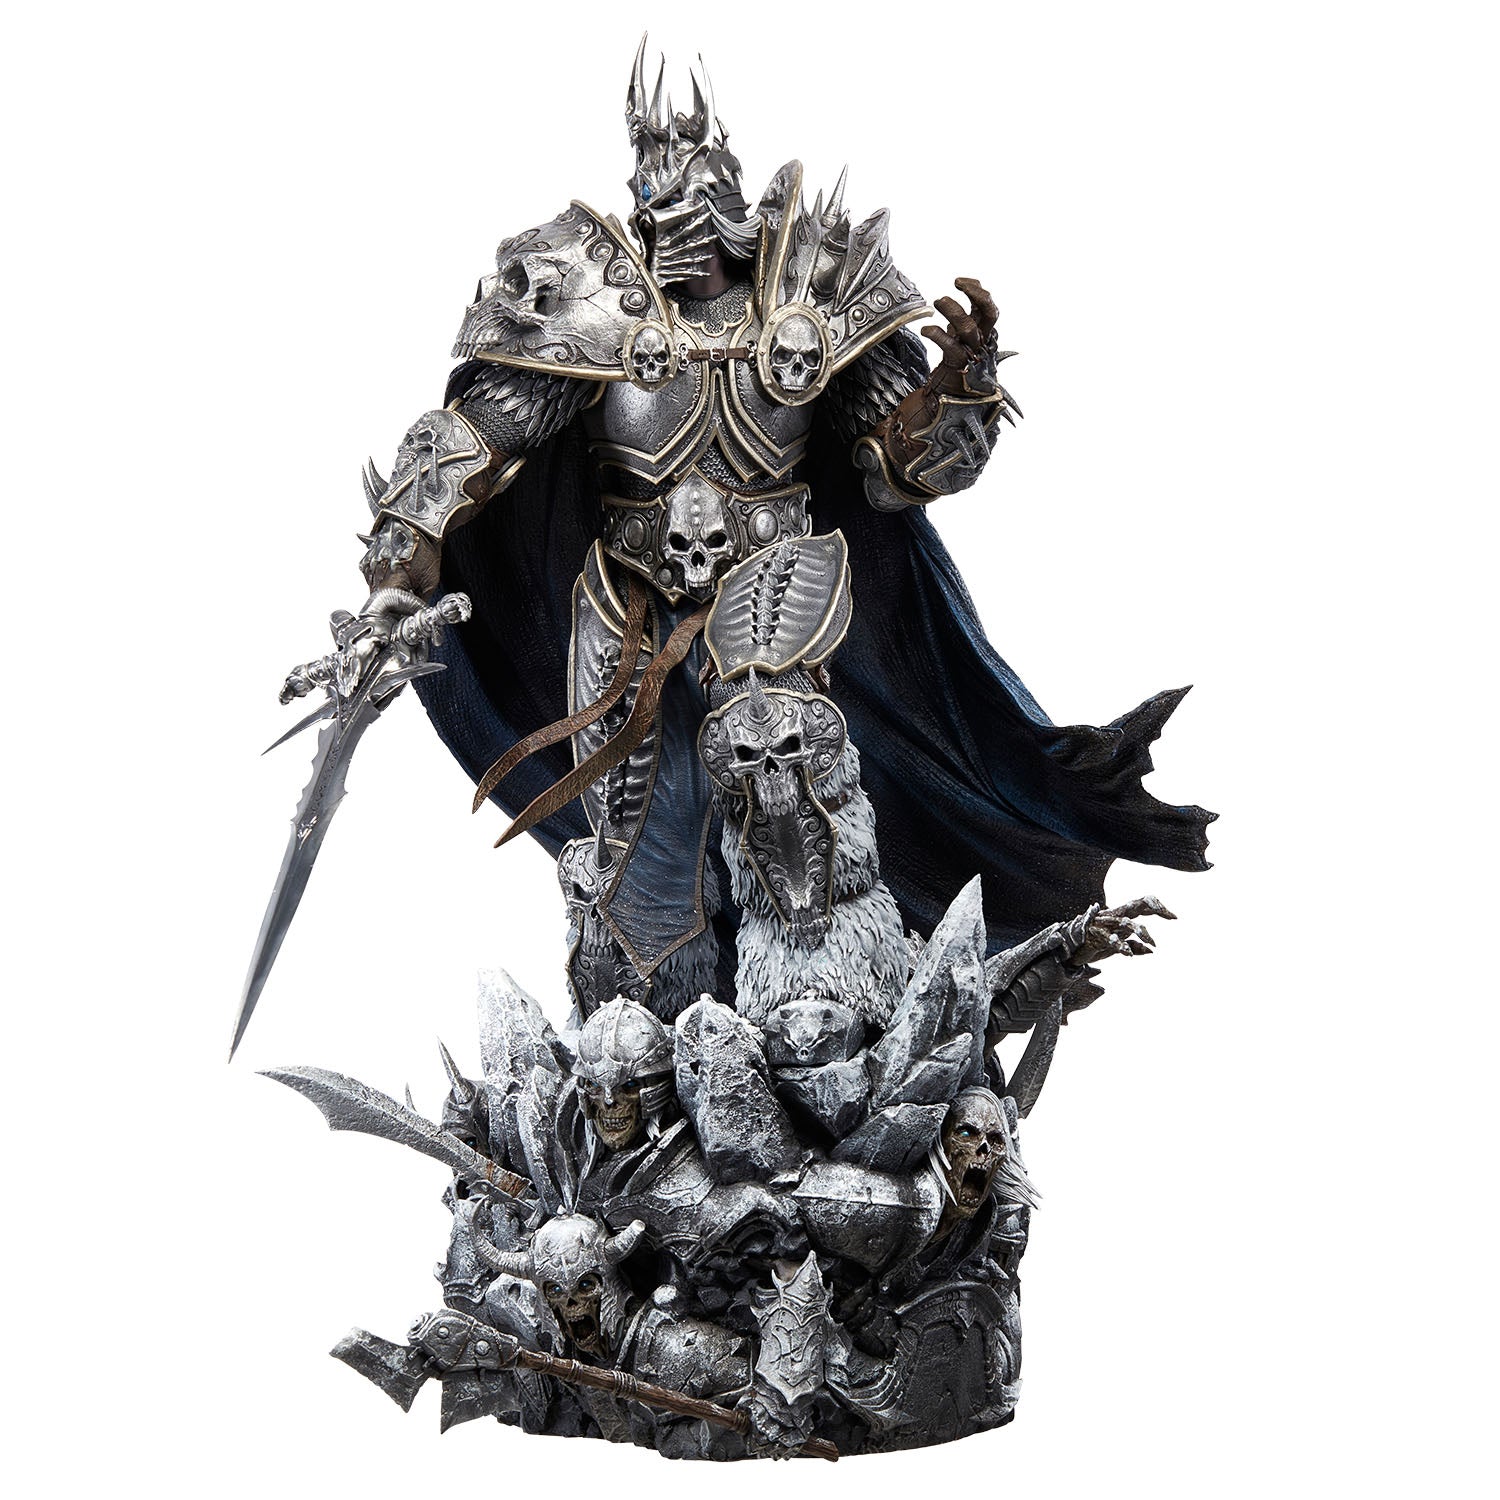 World of Warcraft Lich King Arthas 26" Premium Statue in Grey - Front Left View